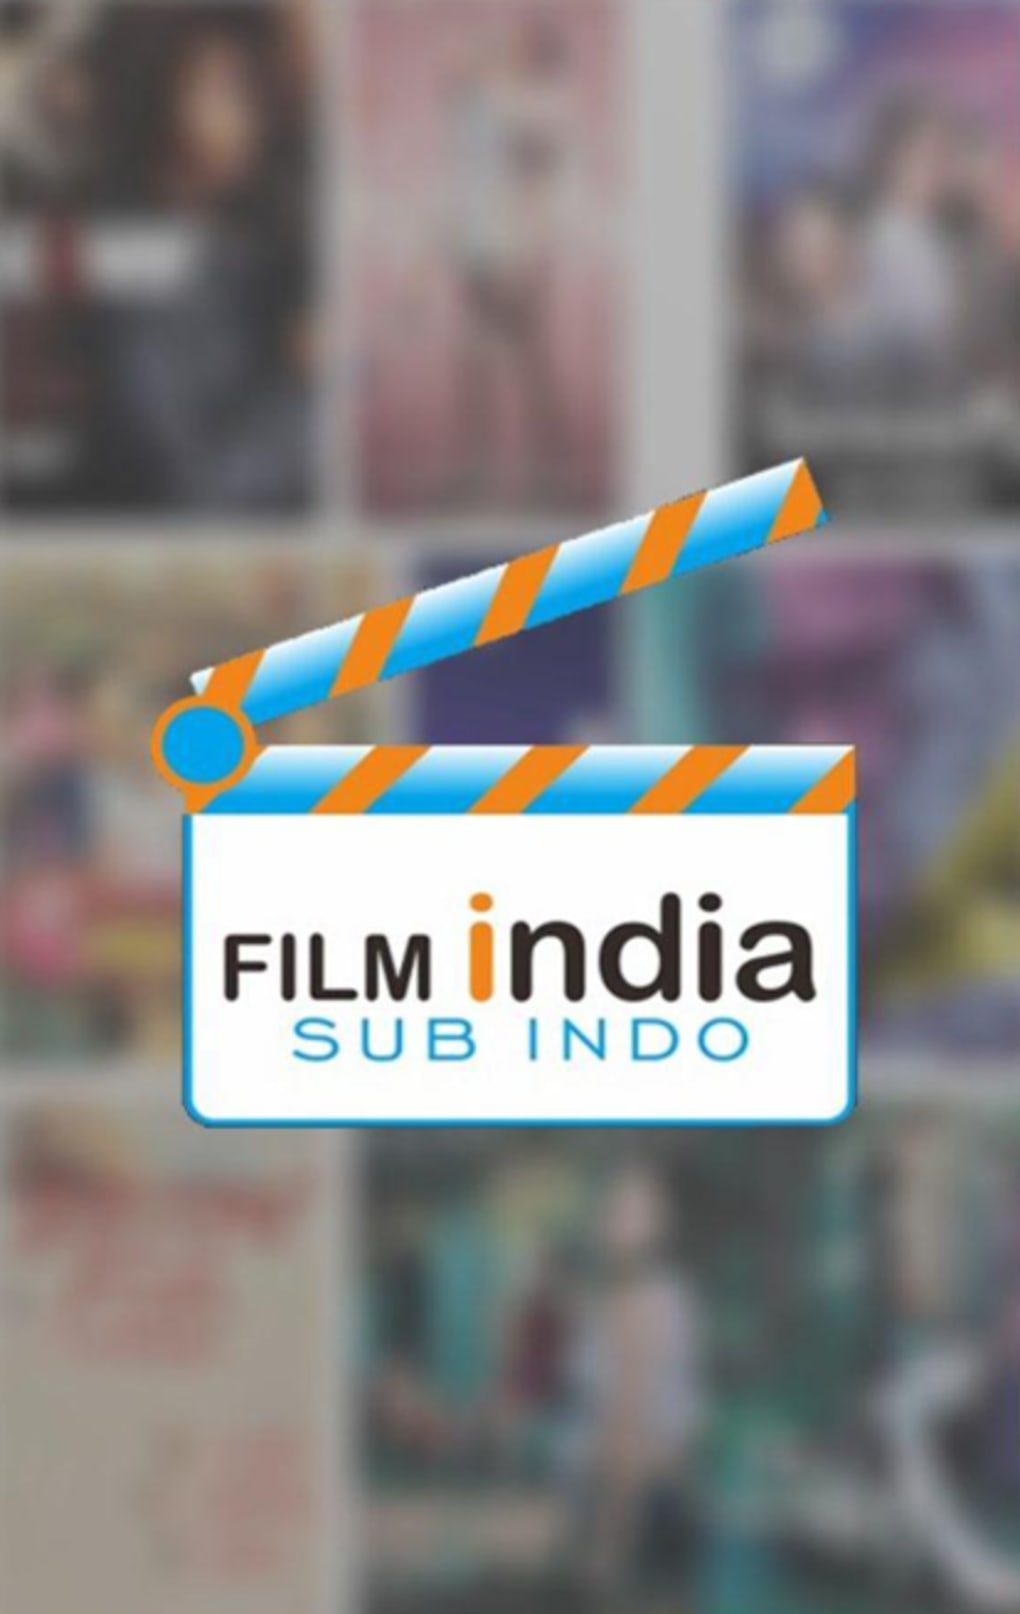 Nonton Film India Sub Indo Para Android Descargar 